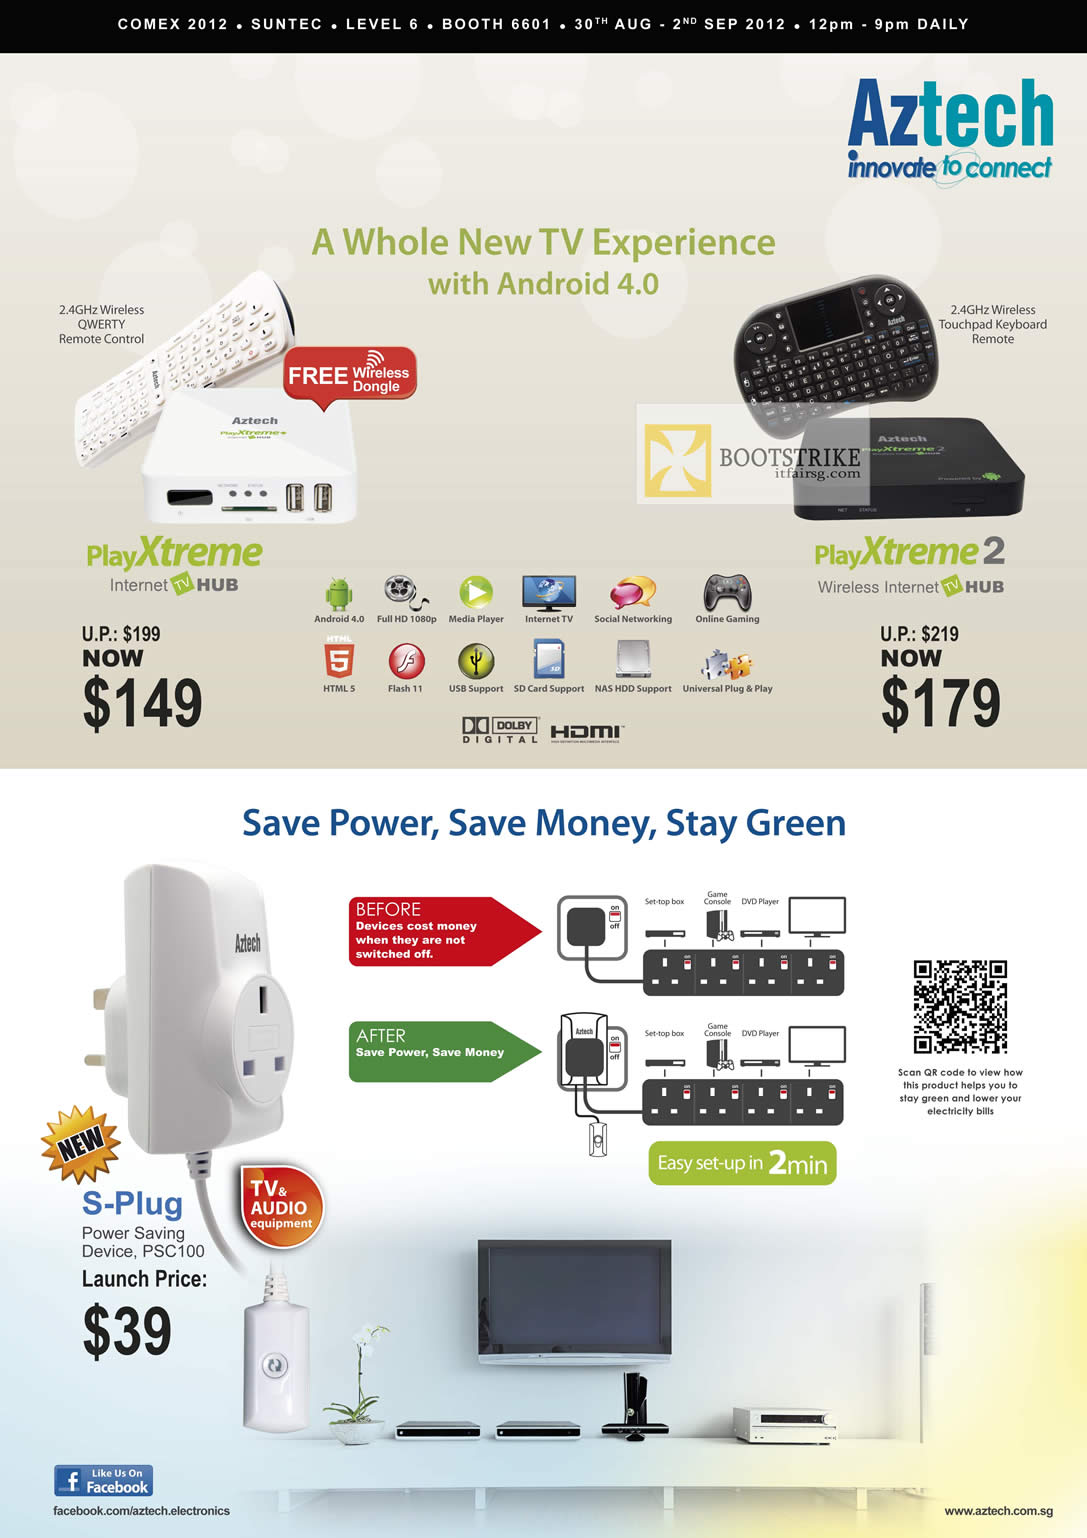 COMEX 2012 price list image brochure of Aztech Media Player PlayXtreme Internet Hub, PlayXtreme 2 Internet TV Hub, S-Plug PSC100